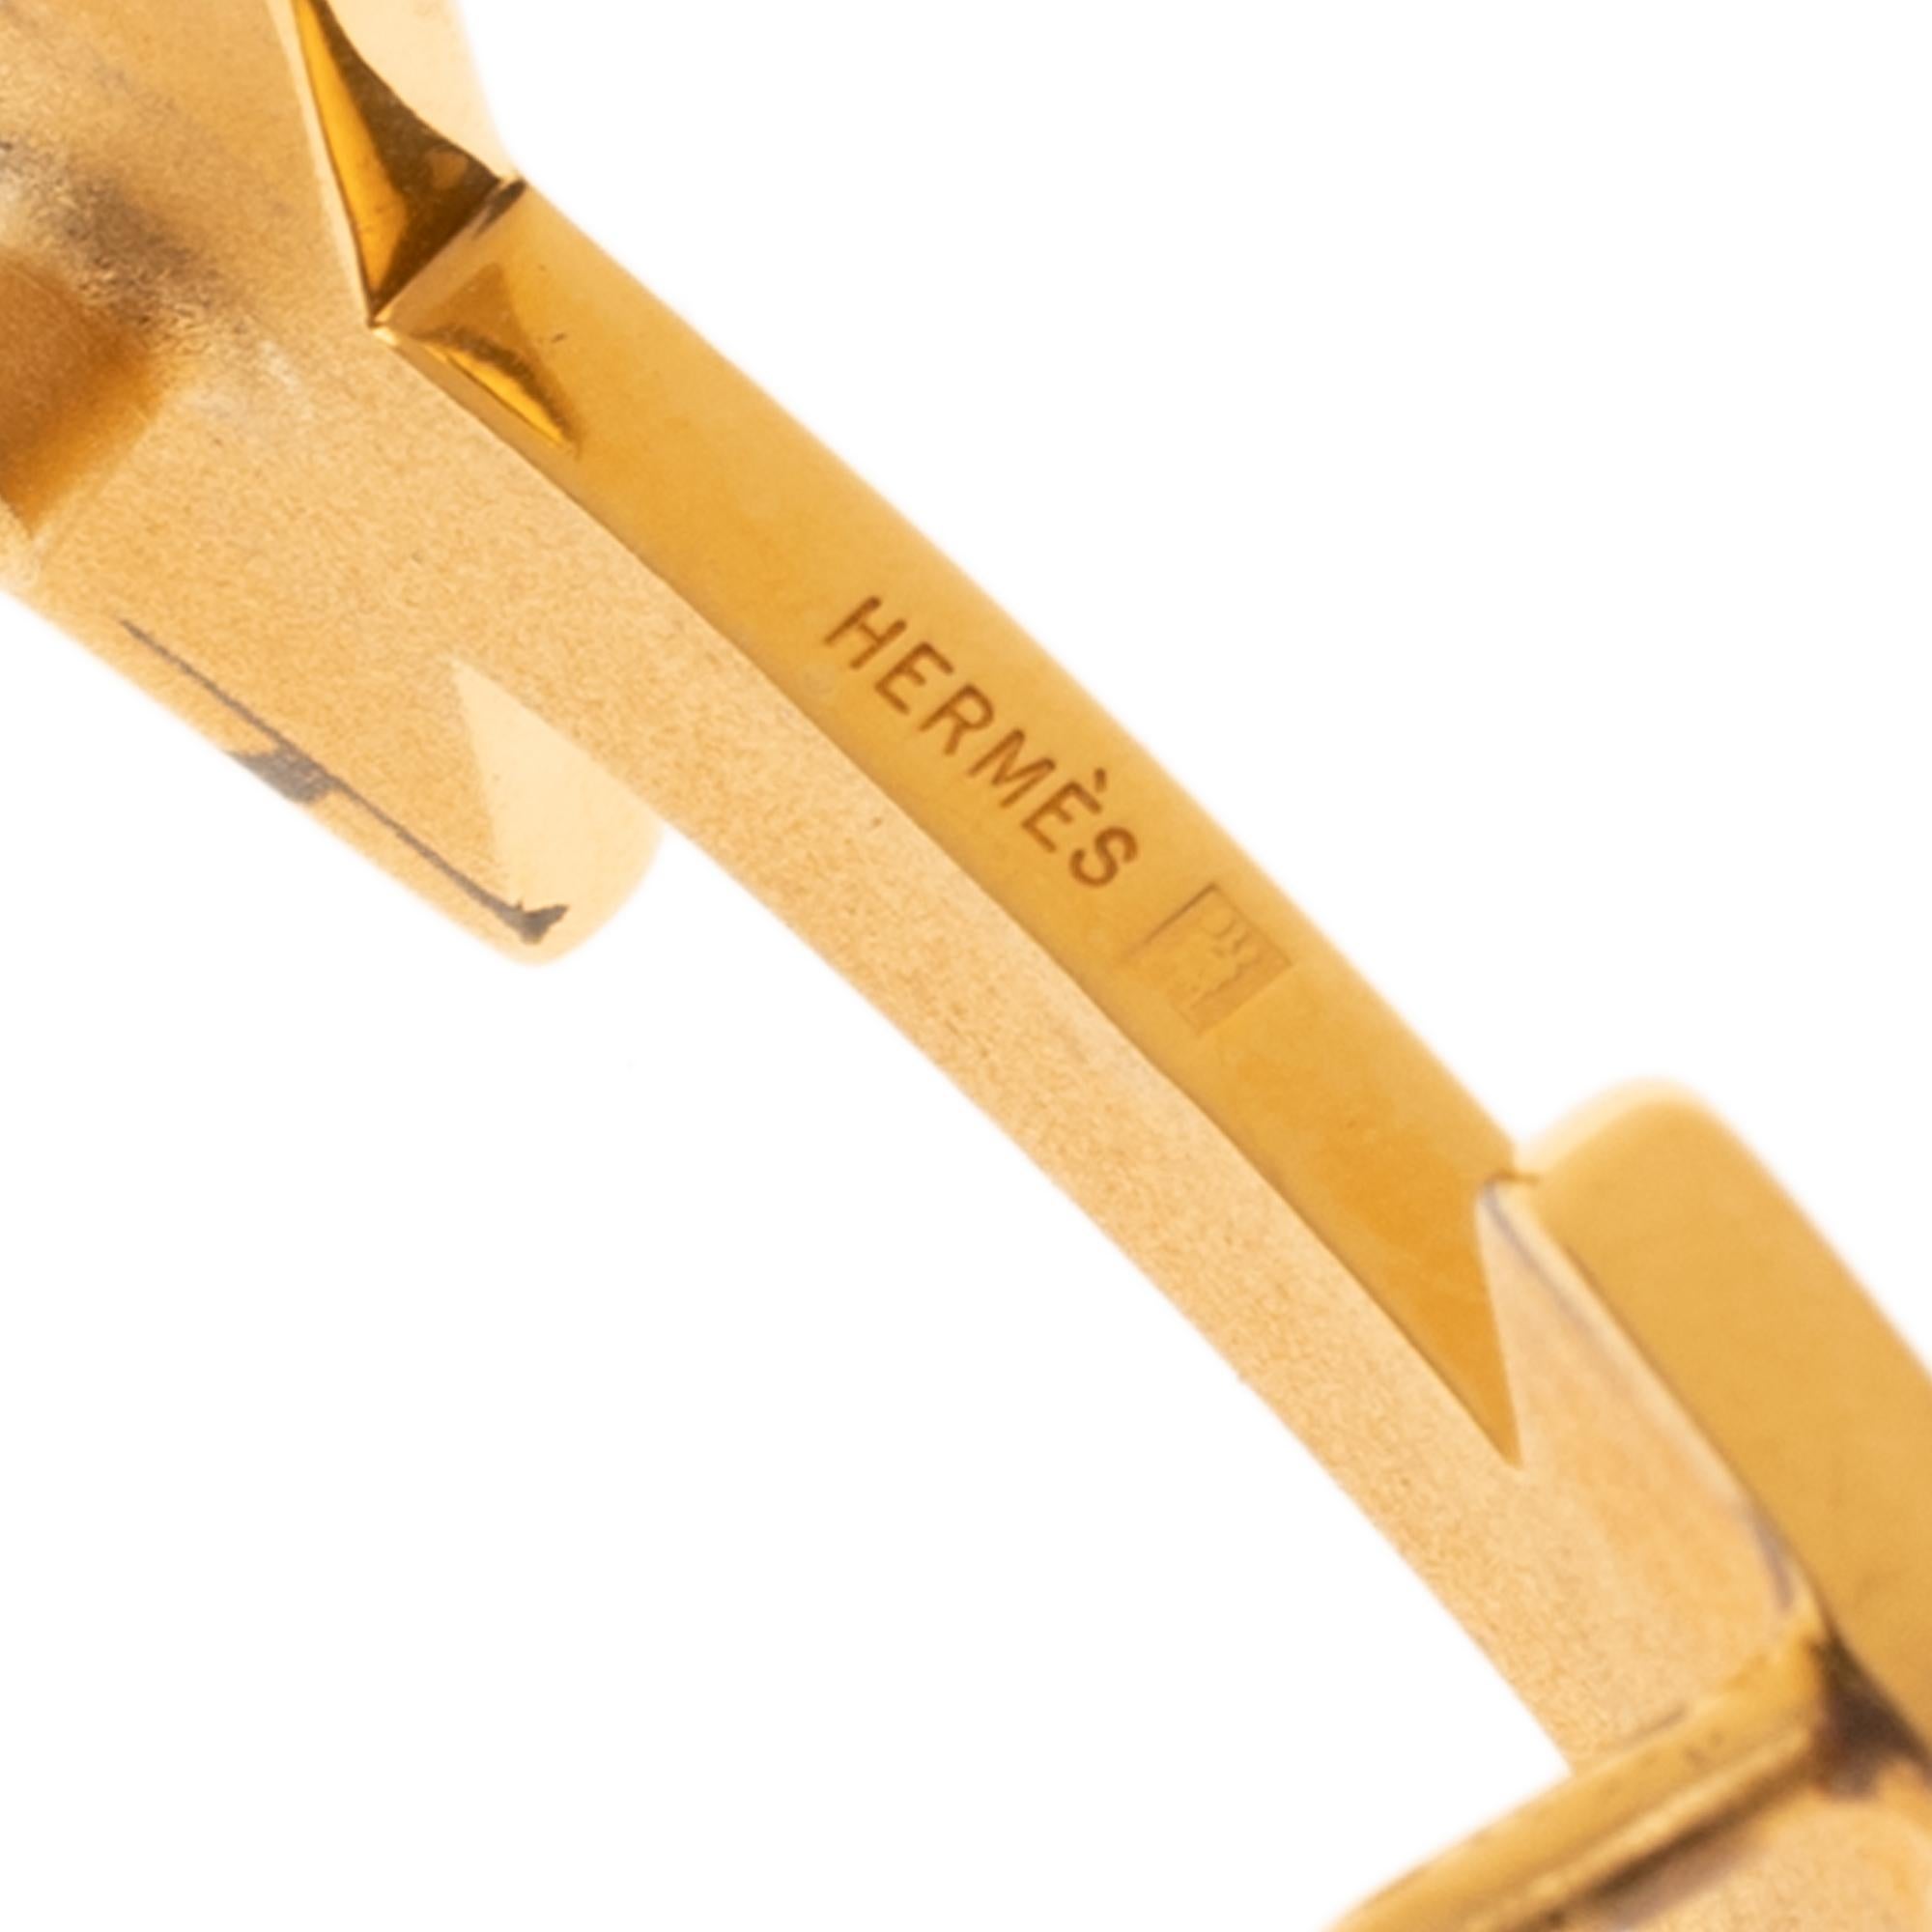 Black Beautiful Hermès belt in black calfskin and gold plated metal buckle